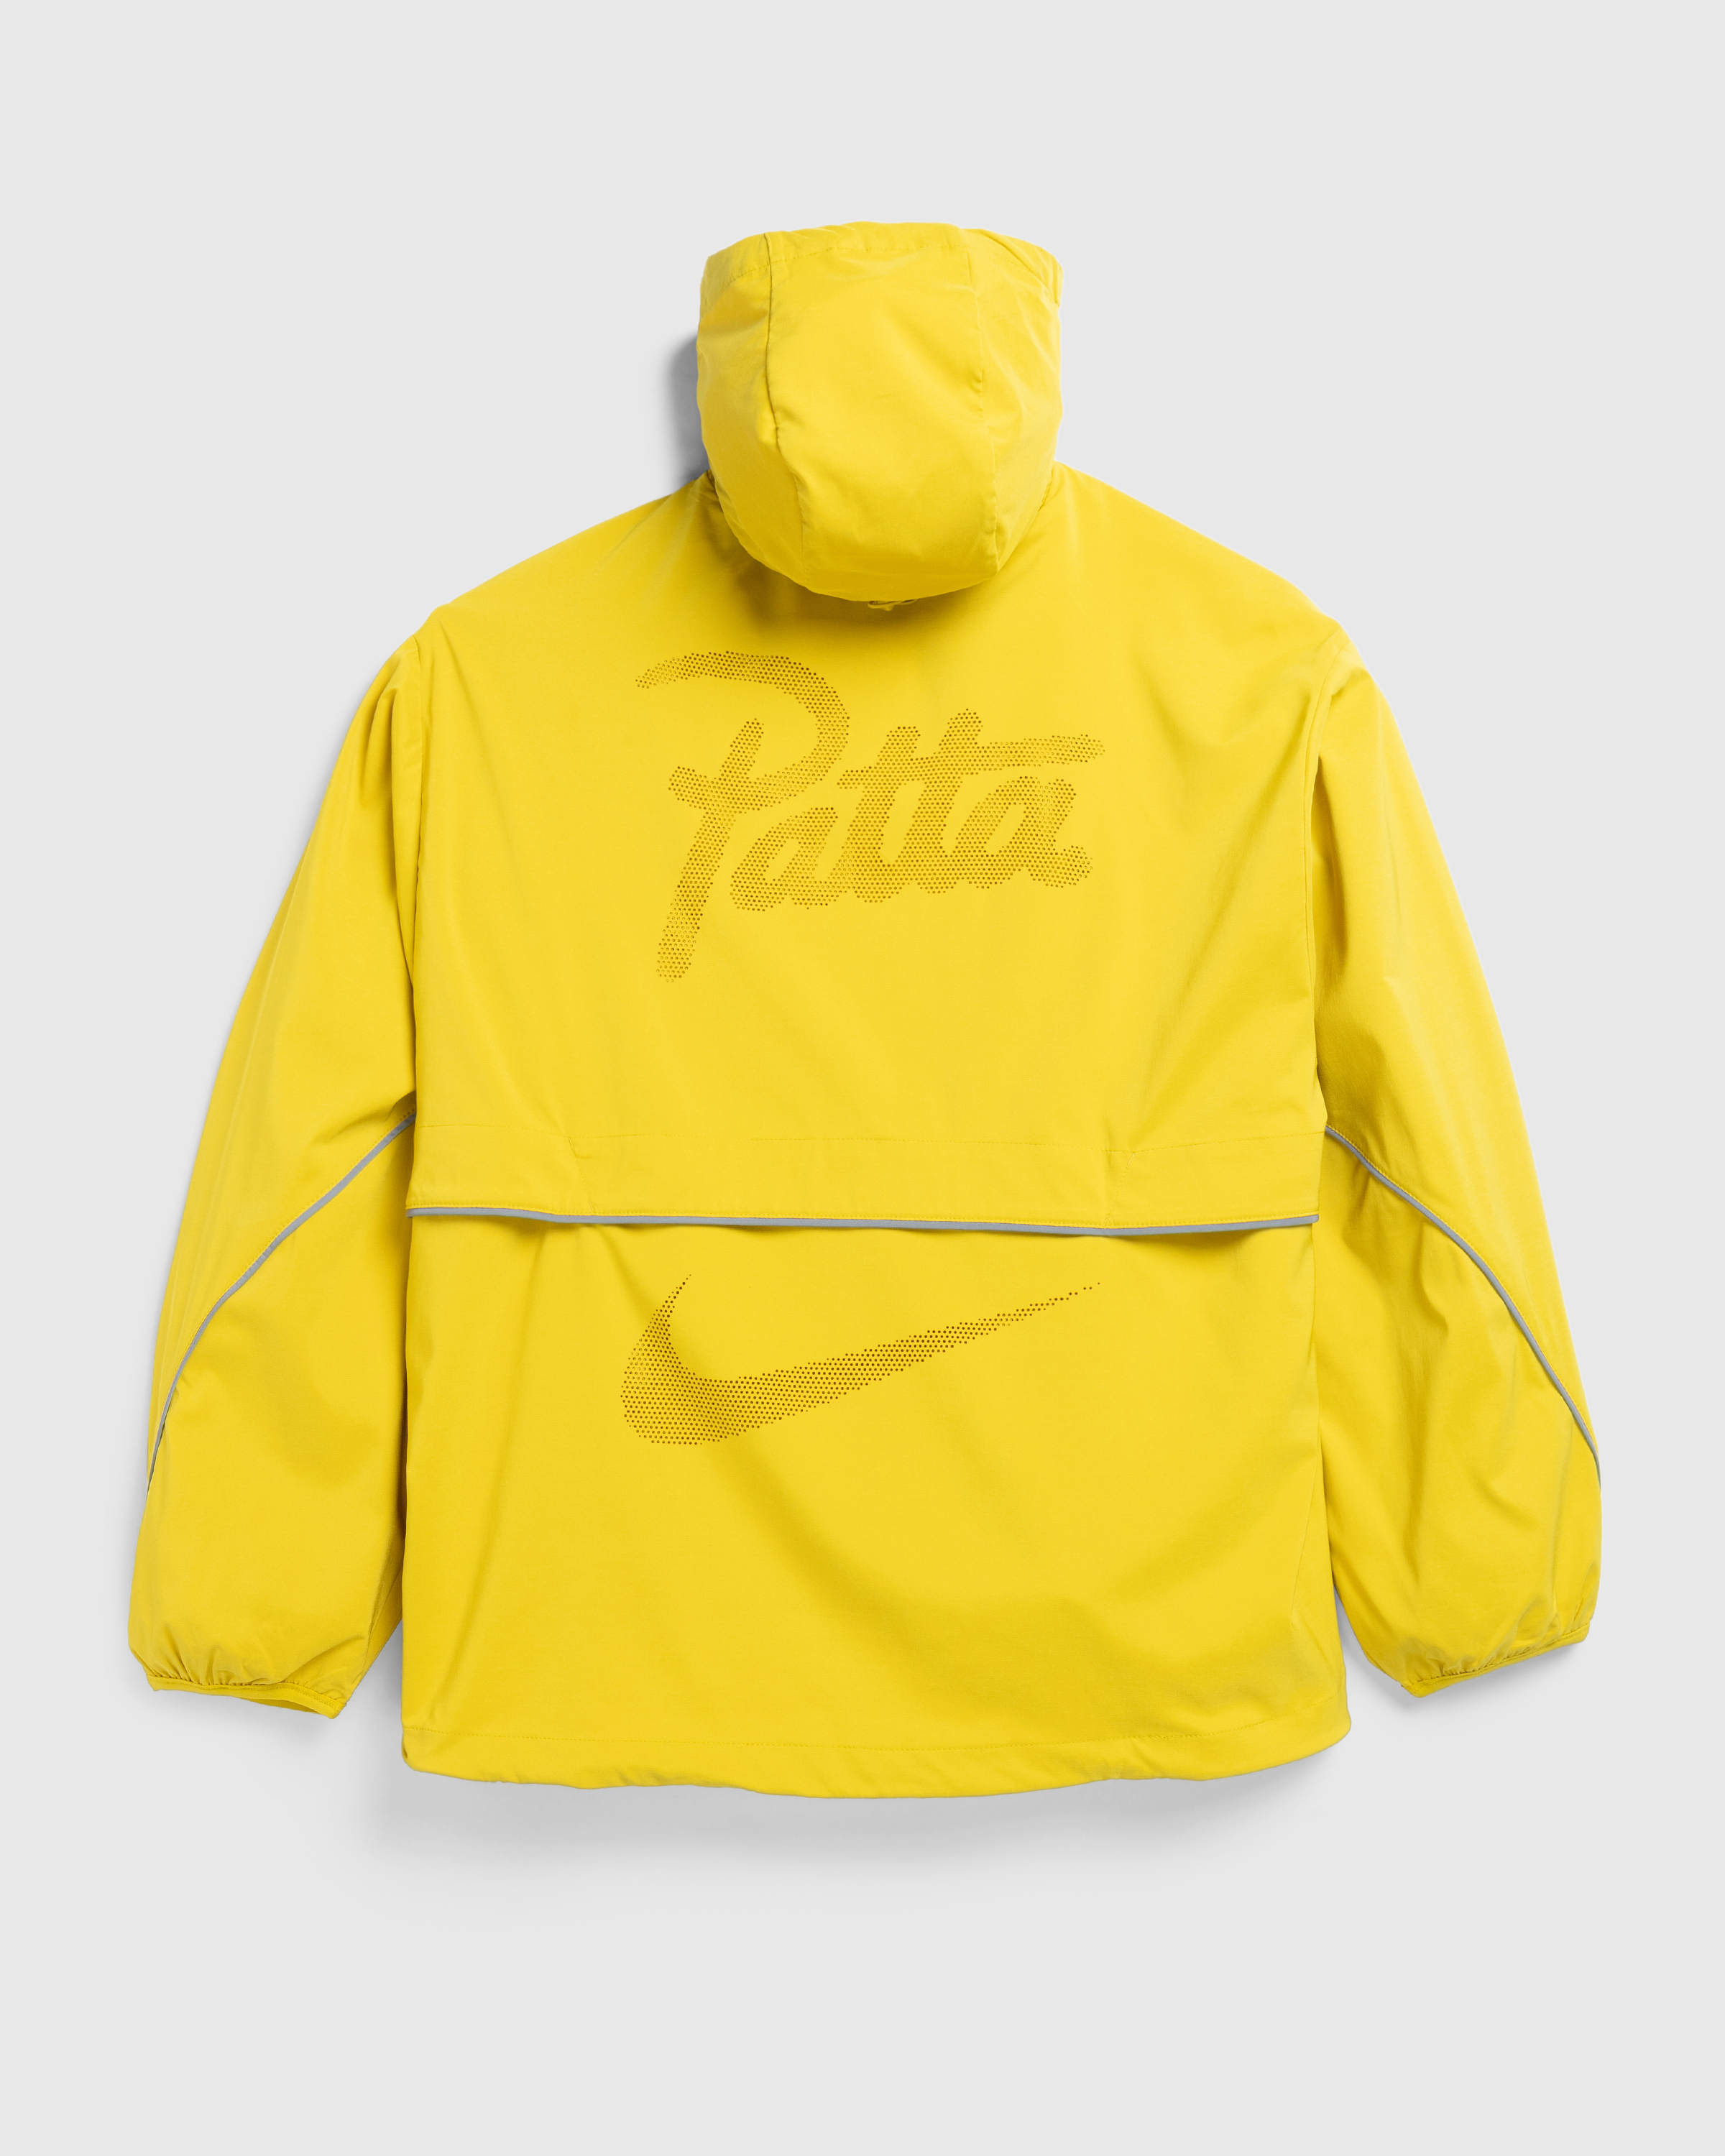 Nike x Patta – Men's Full-Zip Jacket Saffron Quartz - Jackets - Green - Image 6